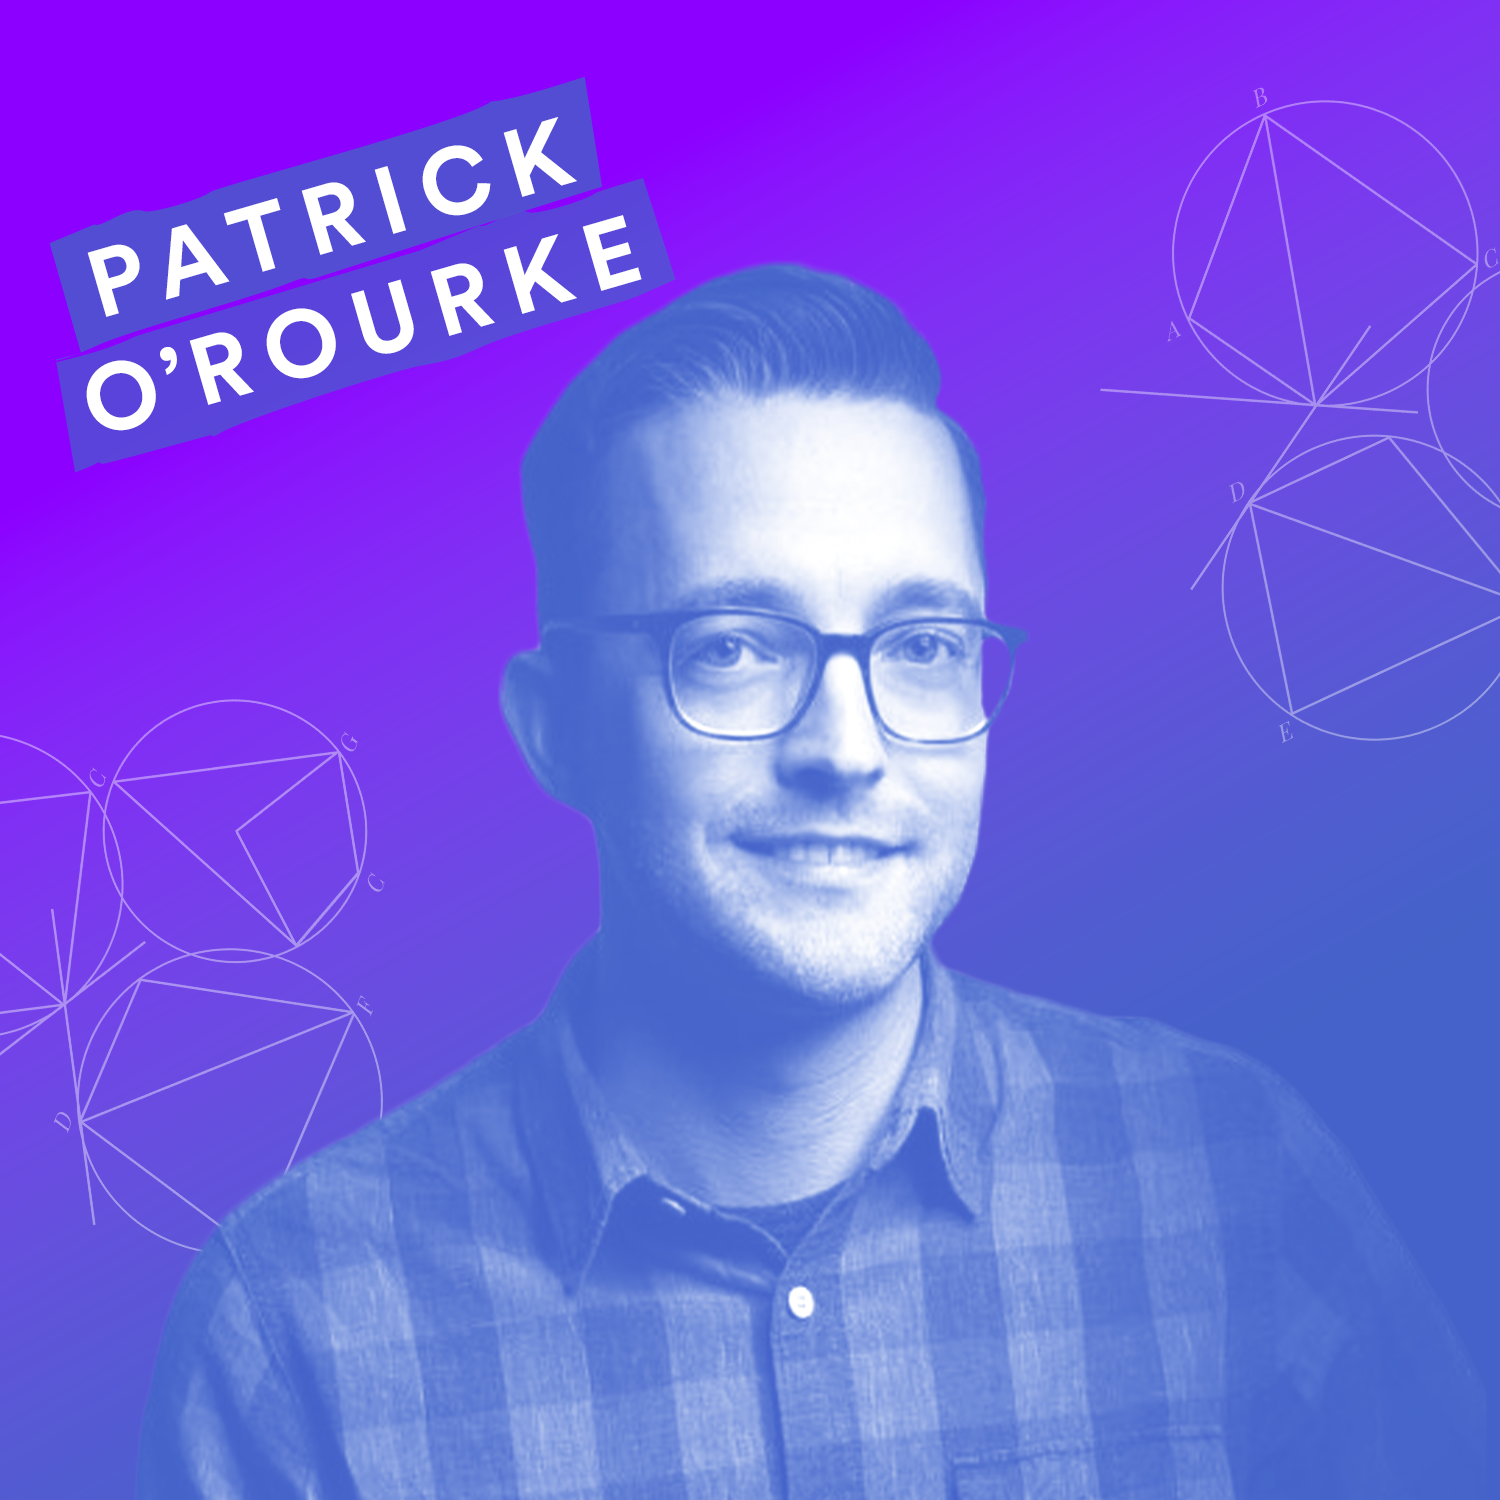 Patrick O'Rourke headshot